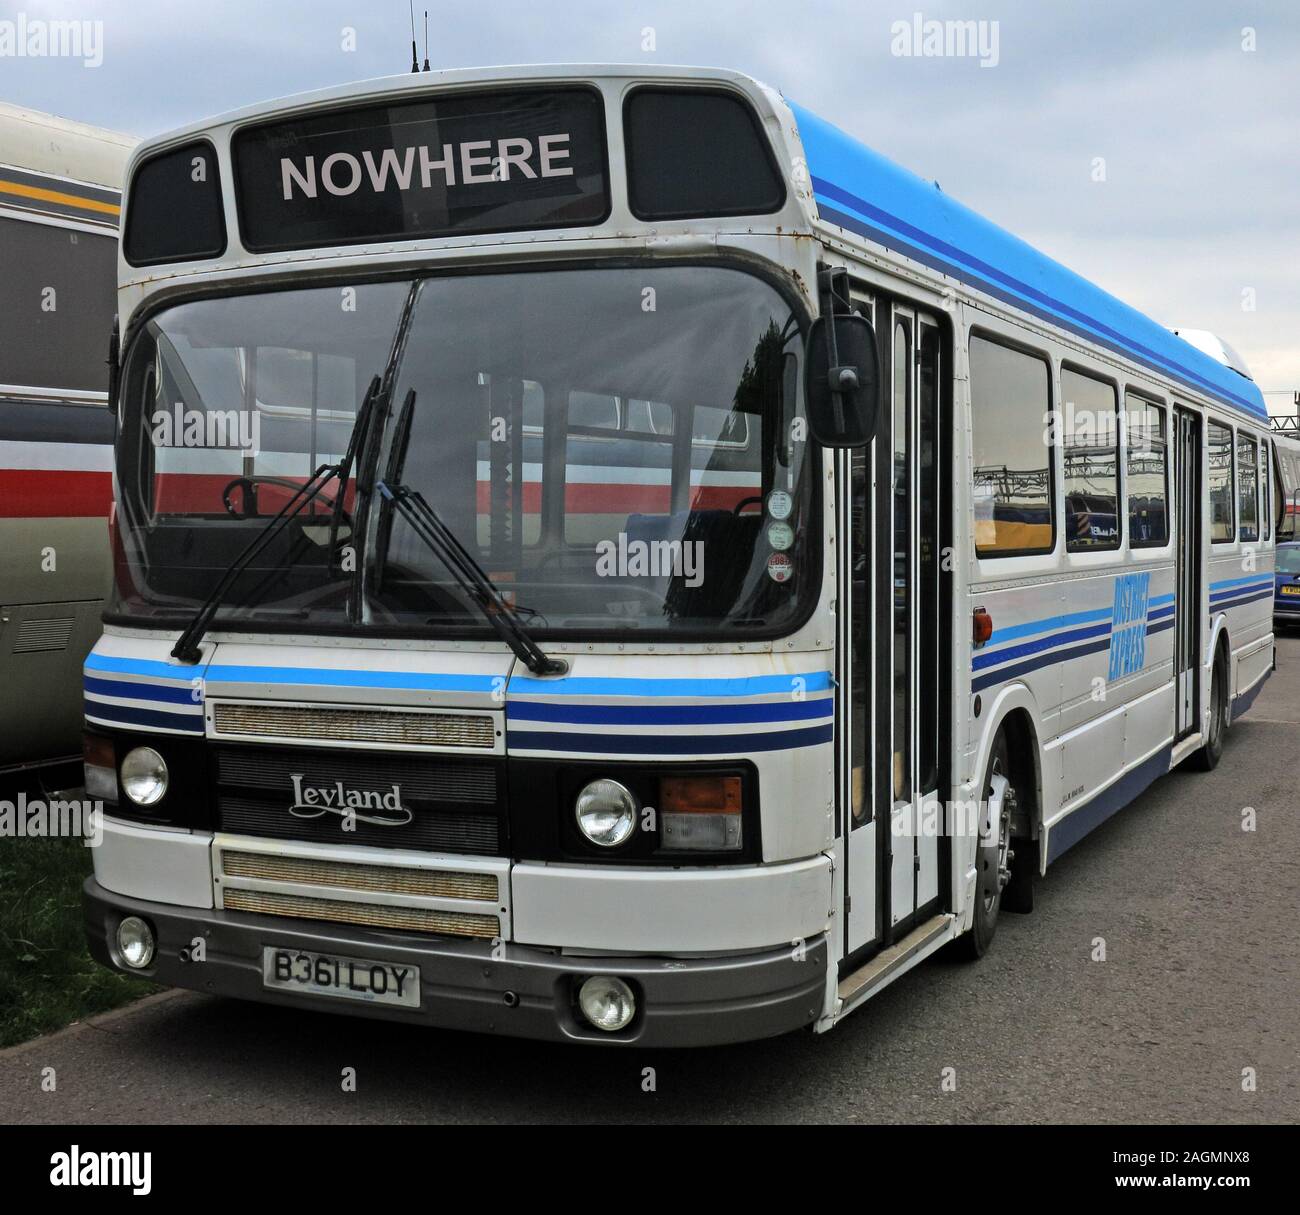 Brexit bus pour nulle part, Leyland, District express - Leyland B361LOY, England, UK Banque D'Images